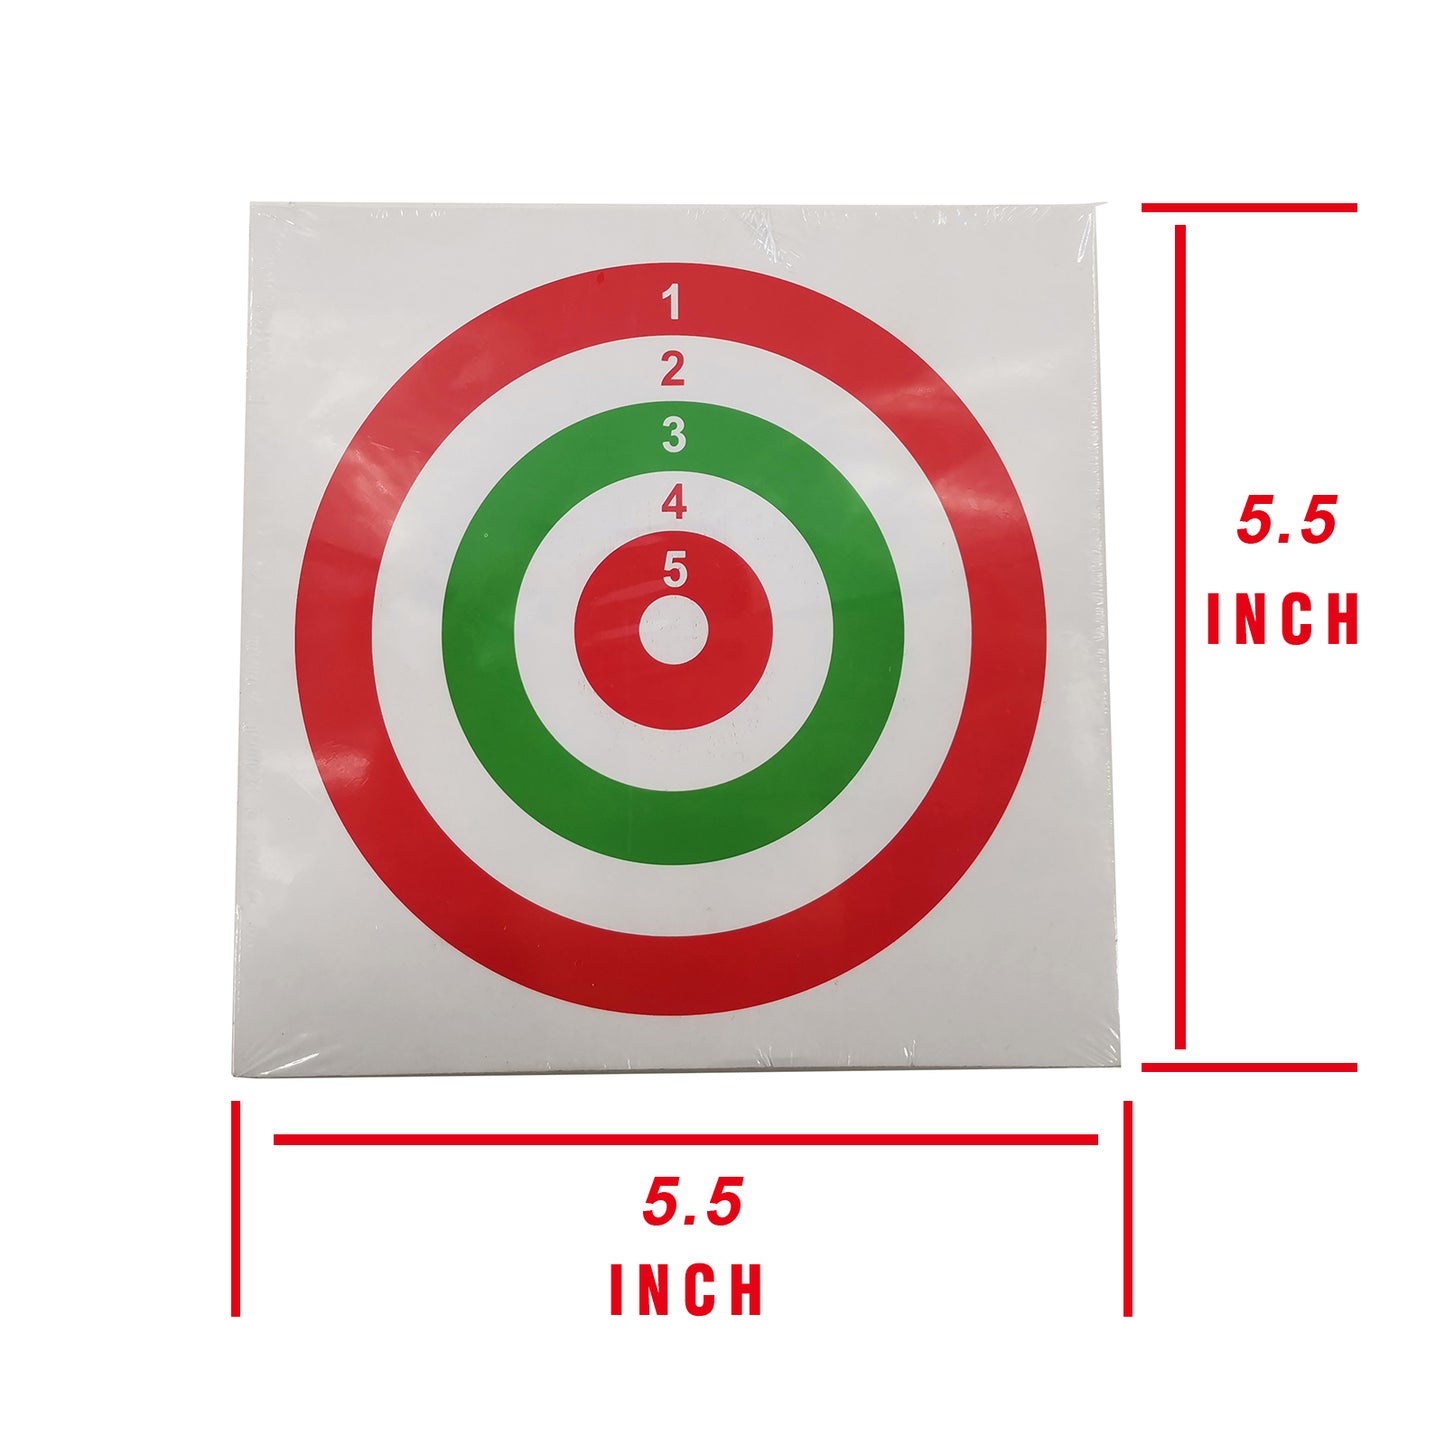 Atflbox 5.5 Inch BB Gun Target Papers for Pellet Trap Shooting Target Holder, Pack of 100(RED GREEN)